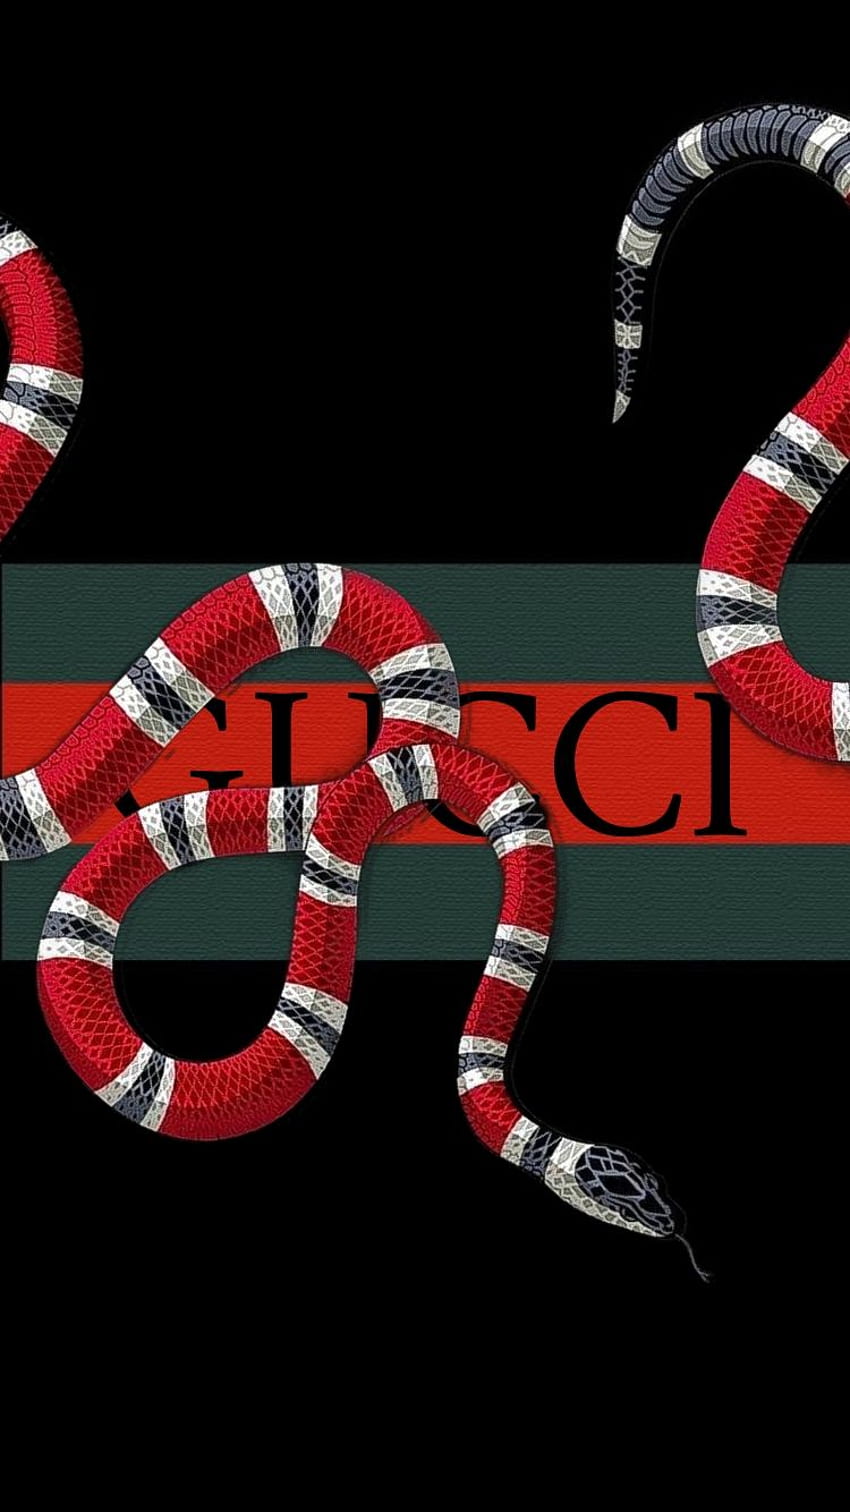 Gucci S/S16  Snake wallpaper, Iphone wallpaper, Prints